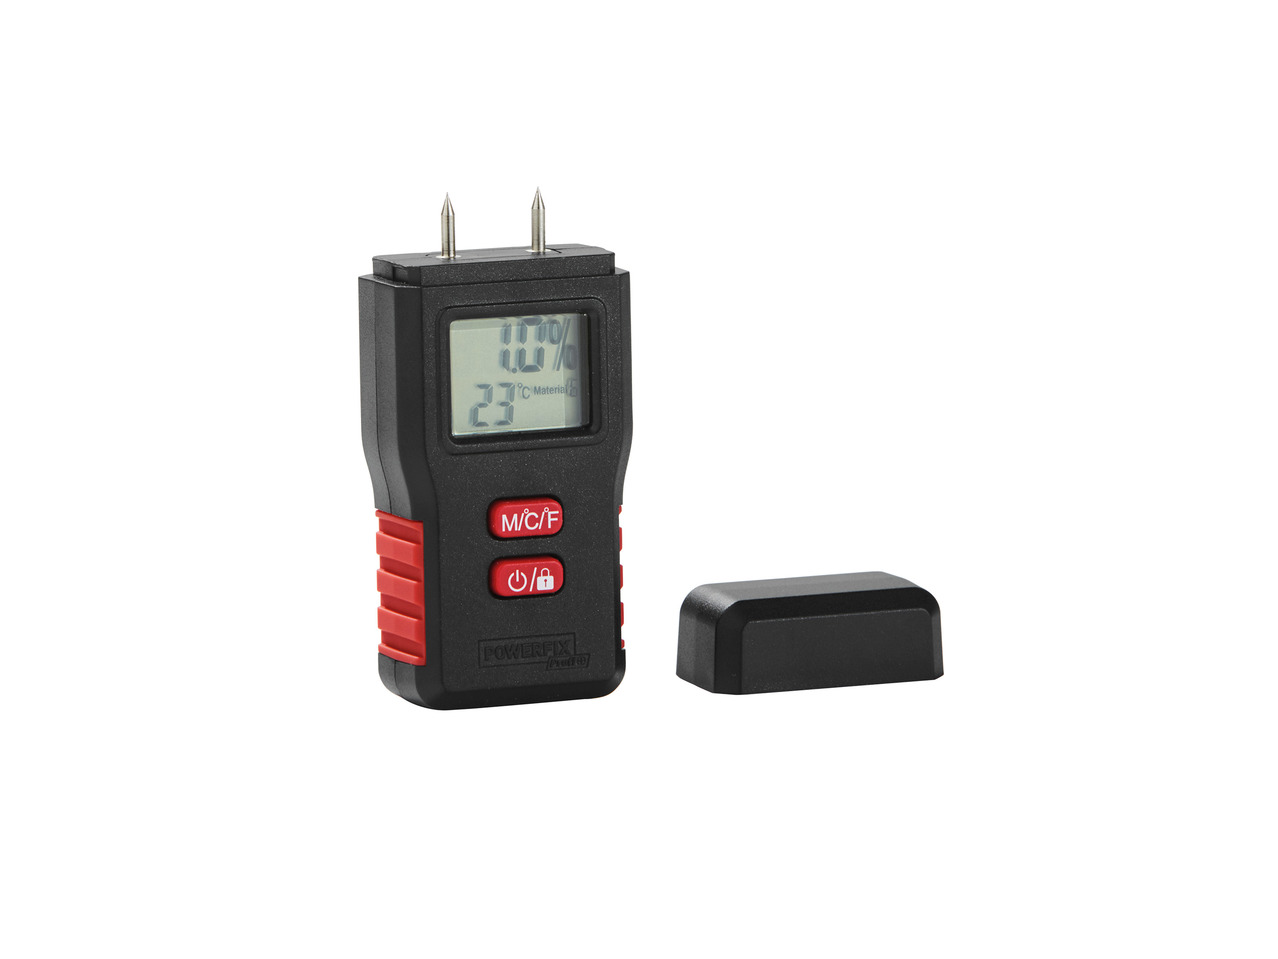 Powerfix Profi Ultrasonic Distance Meter, Multi-Purpose Detector or Moisture Meter1